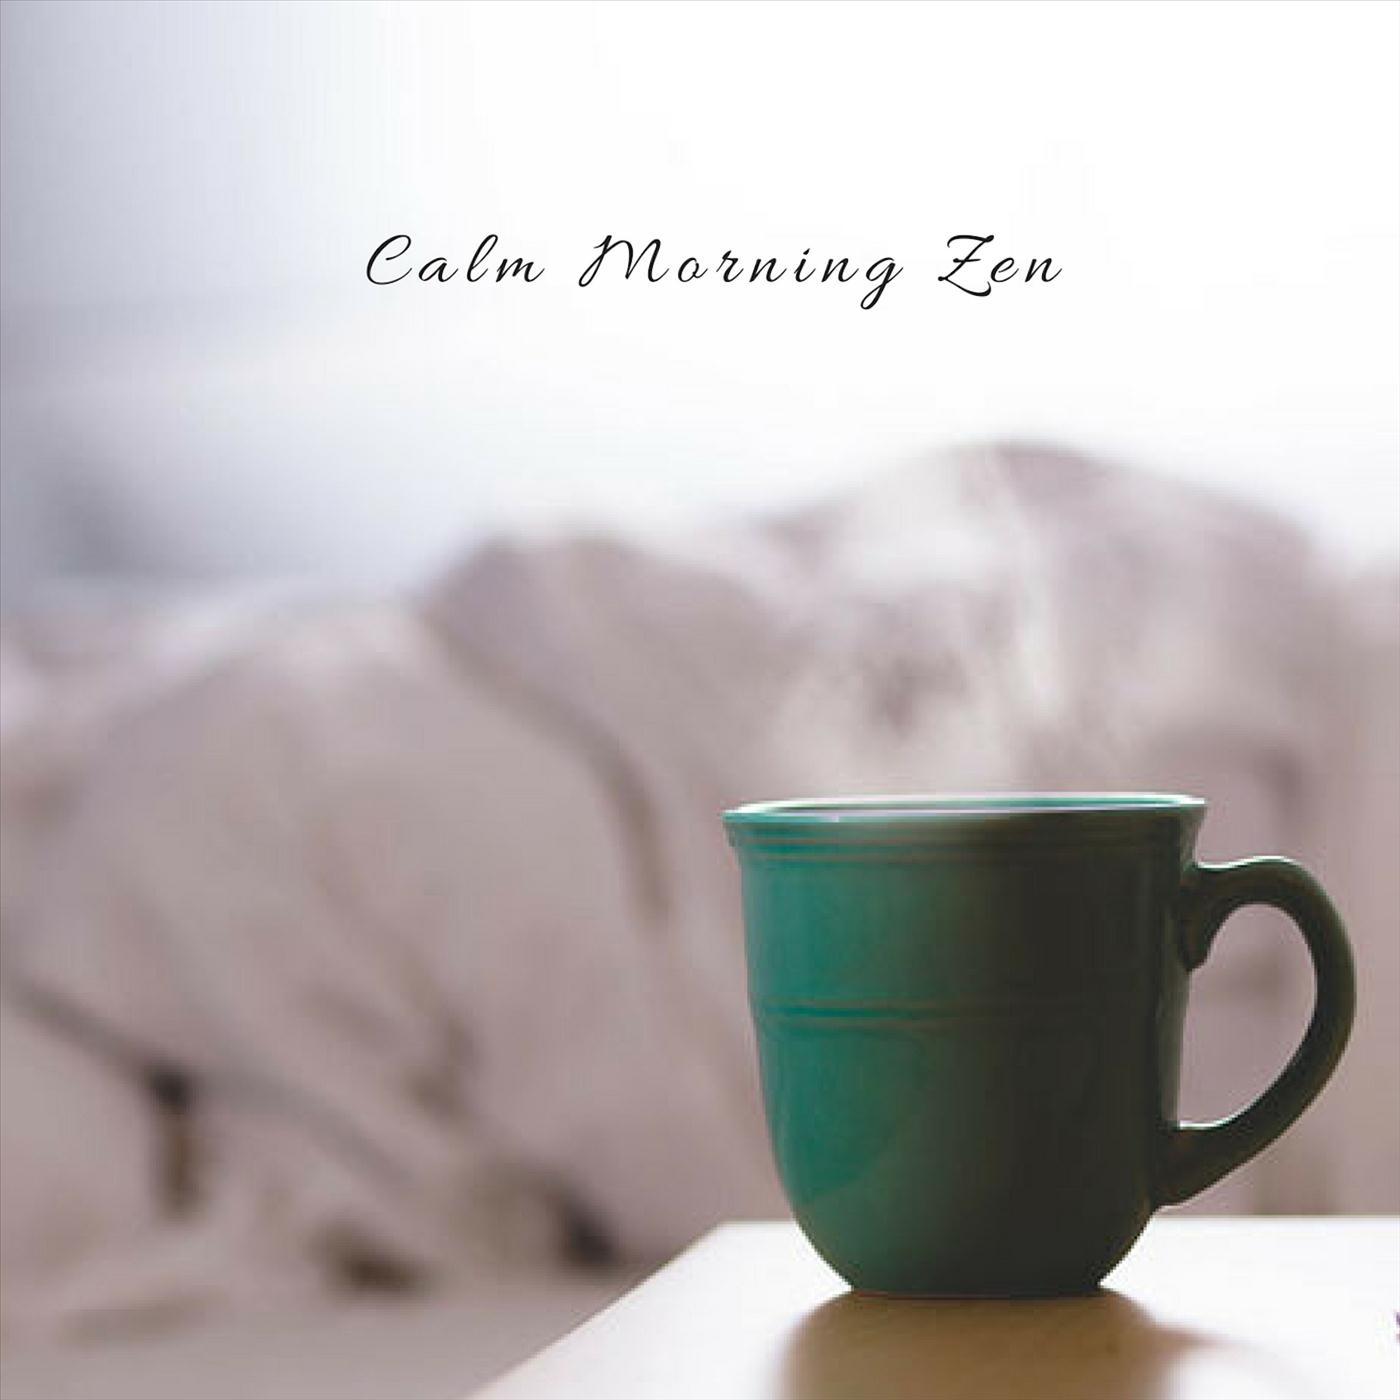 Calm Morning Zen